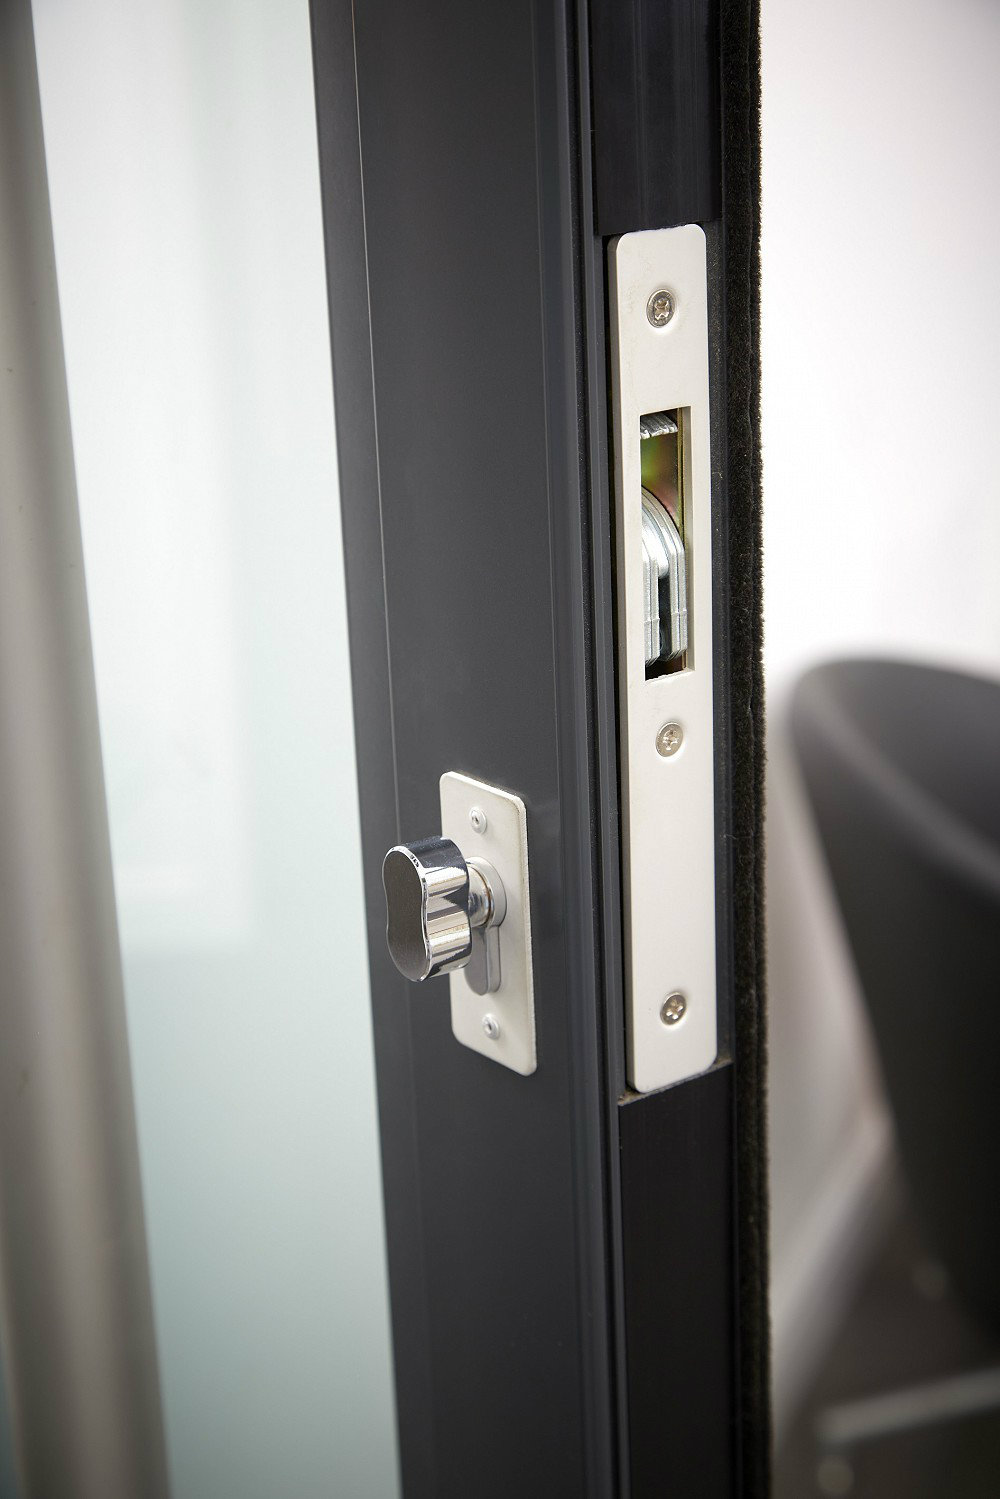 Close-up image of the locking mechanism on an aluminium entrance door